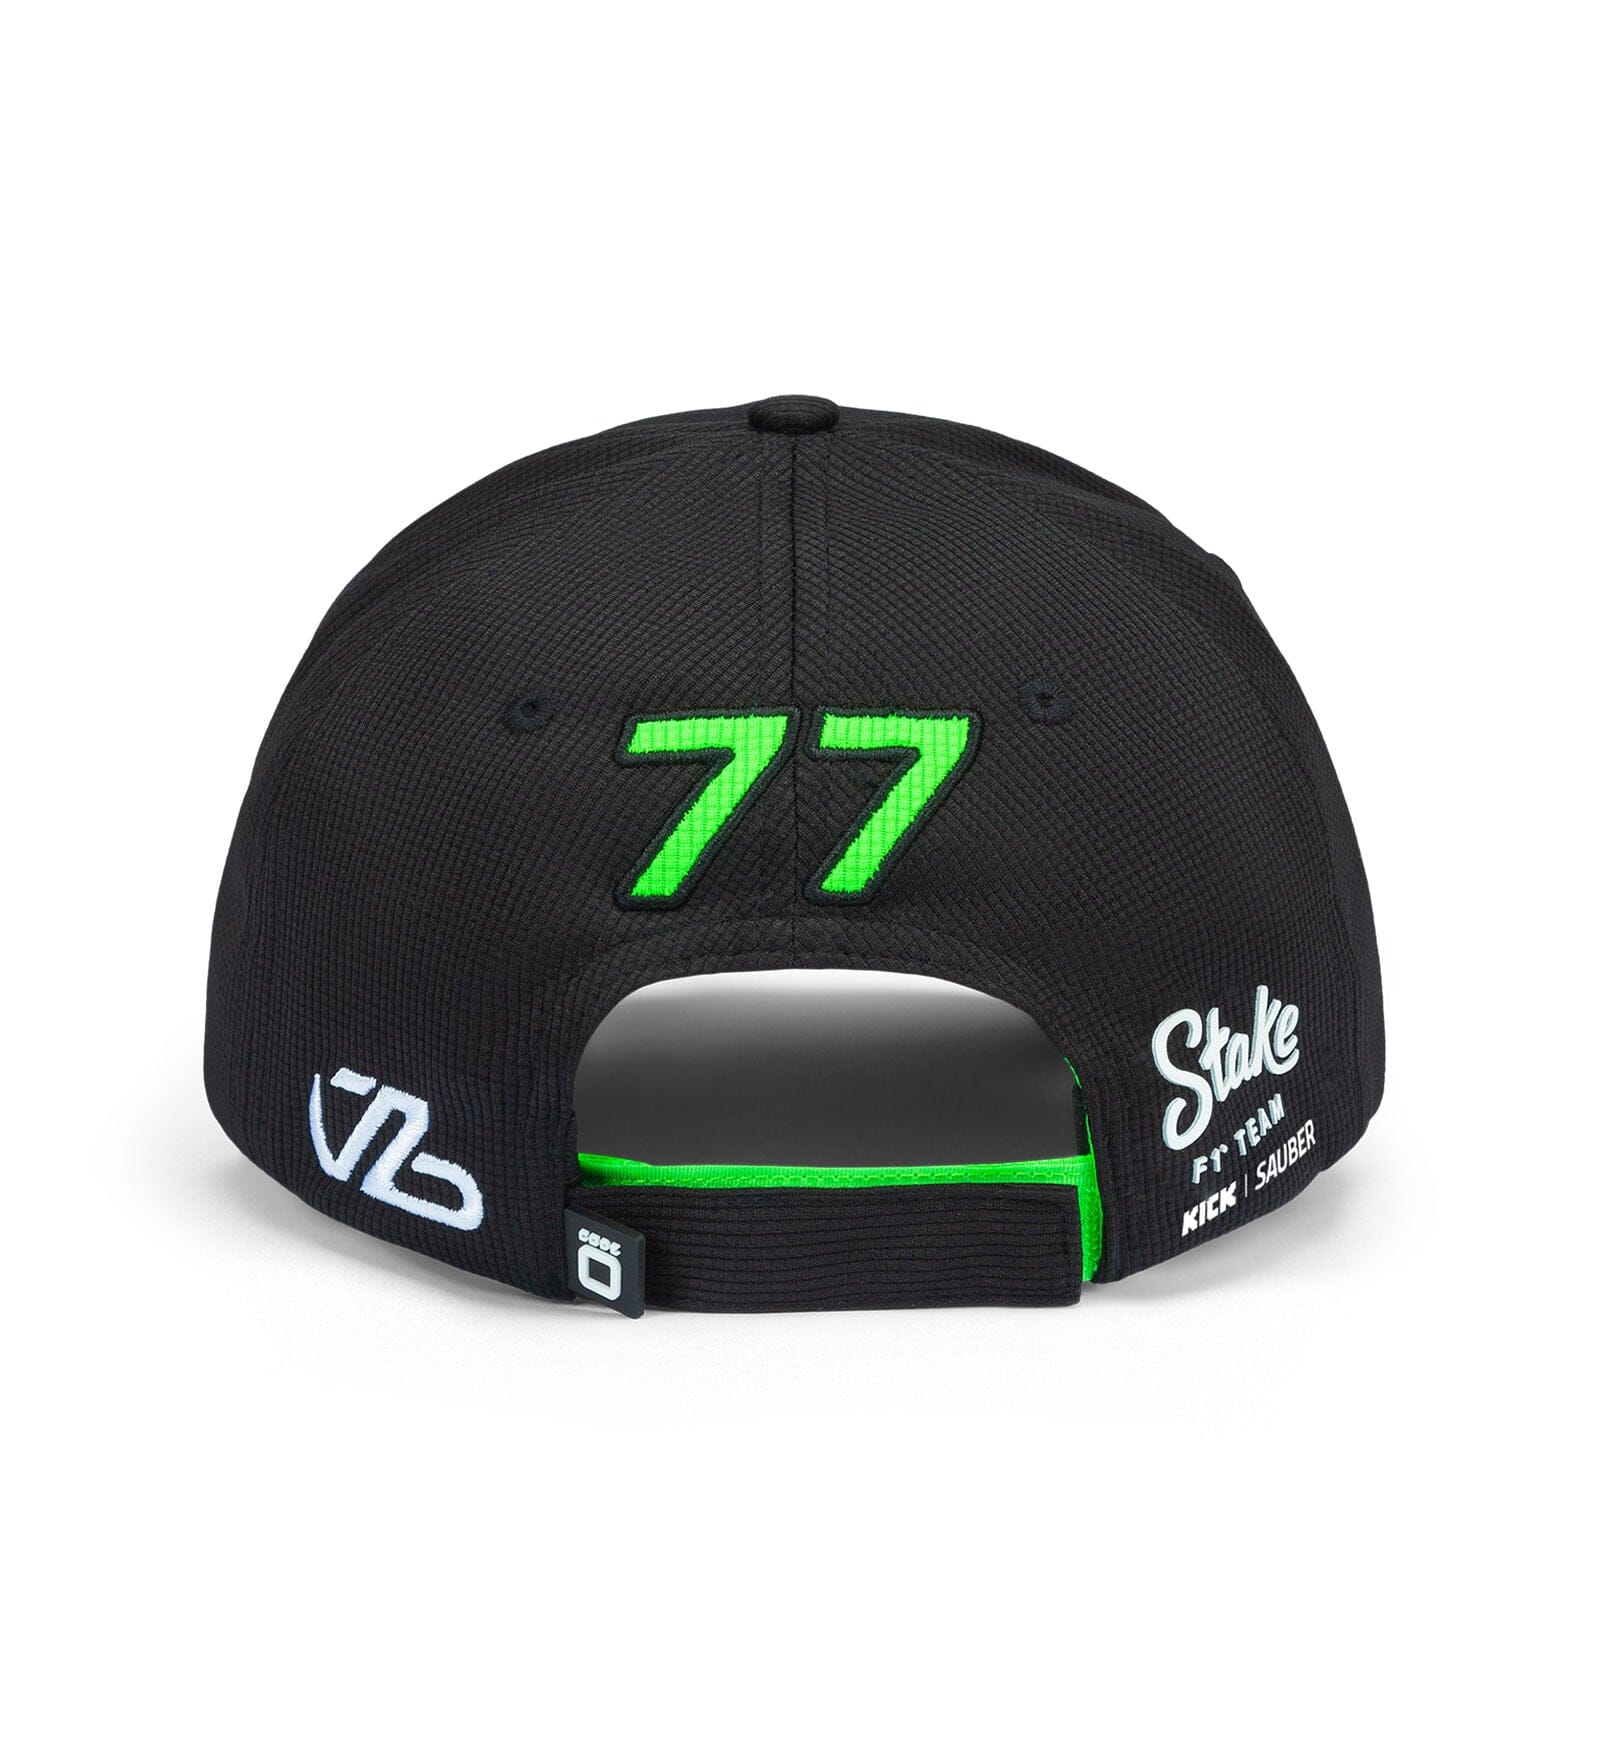 Stake F1 Kick Sauber 2024 Team Valtteri Bottas Baseball Hat - Black